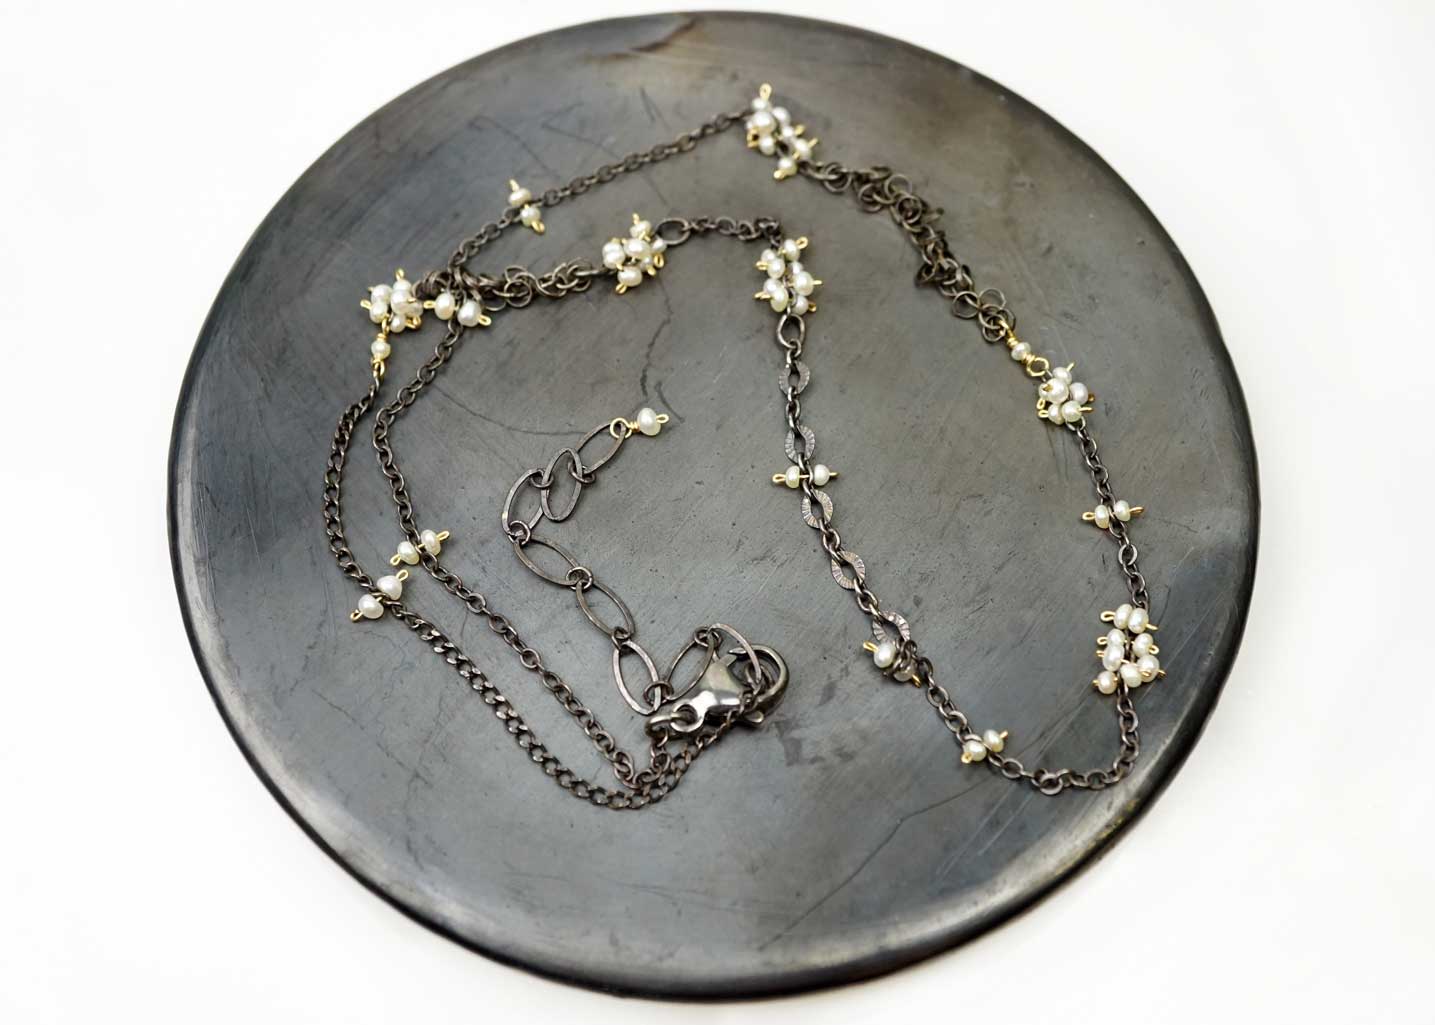 Delicate Pearl Chain Necklace